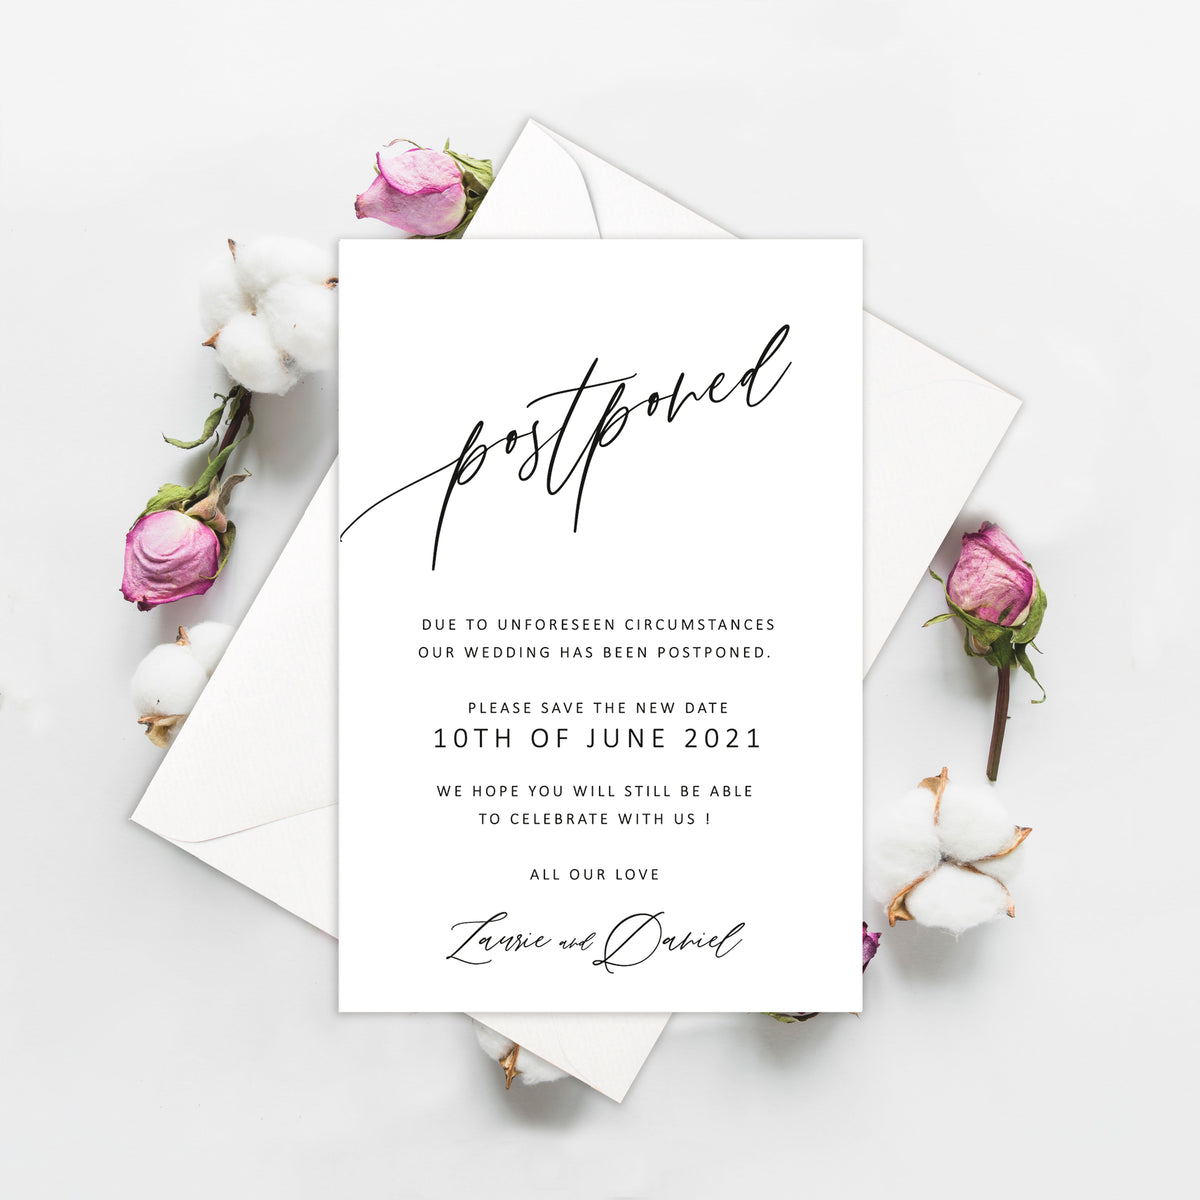 Postponed & Change the Date Calligraphy  - Wedding Postpone Card